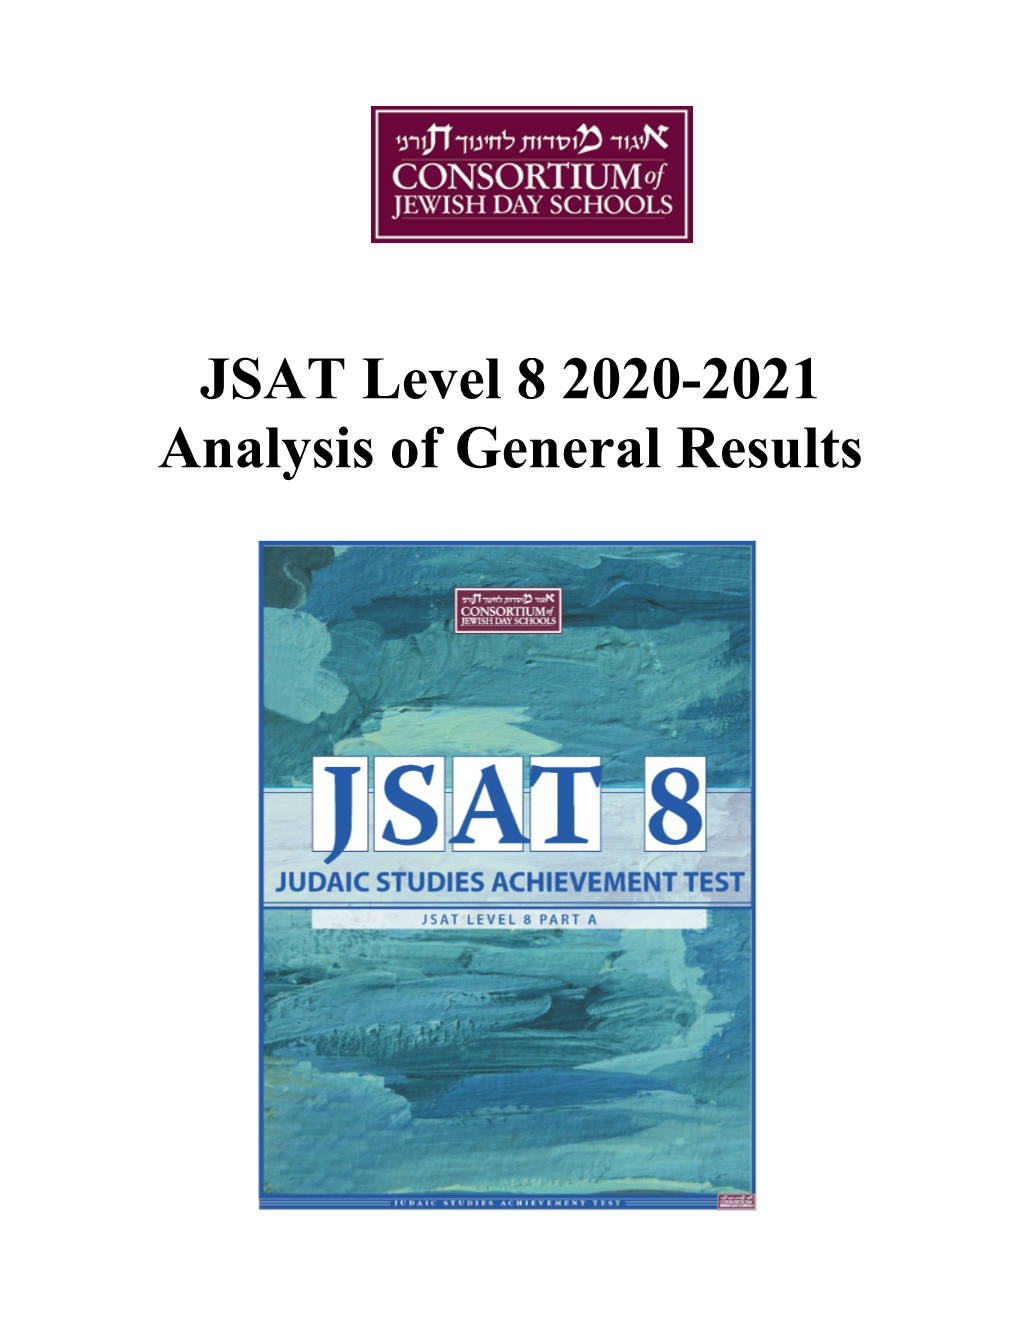 JSAT Level 8 2020-2021 Analysis of General Results